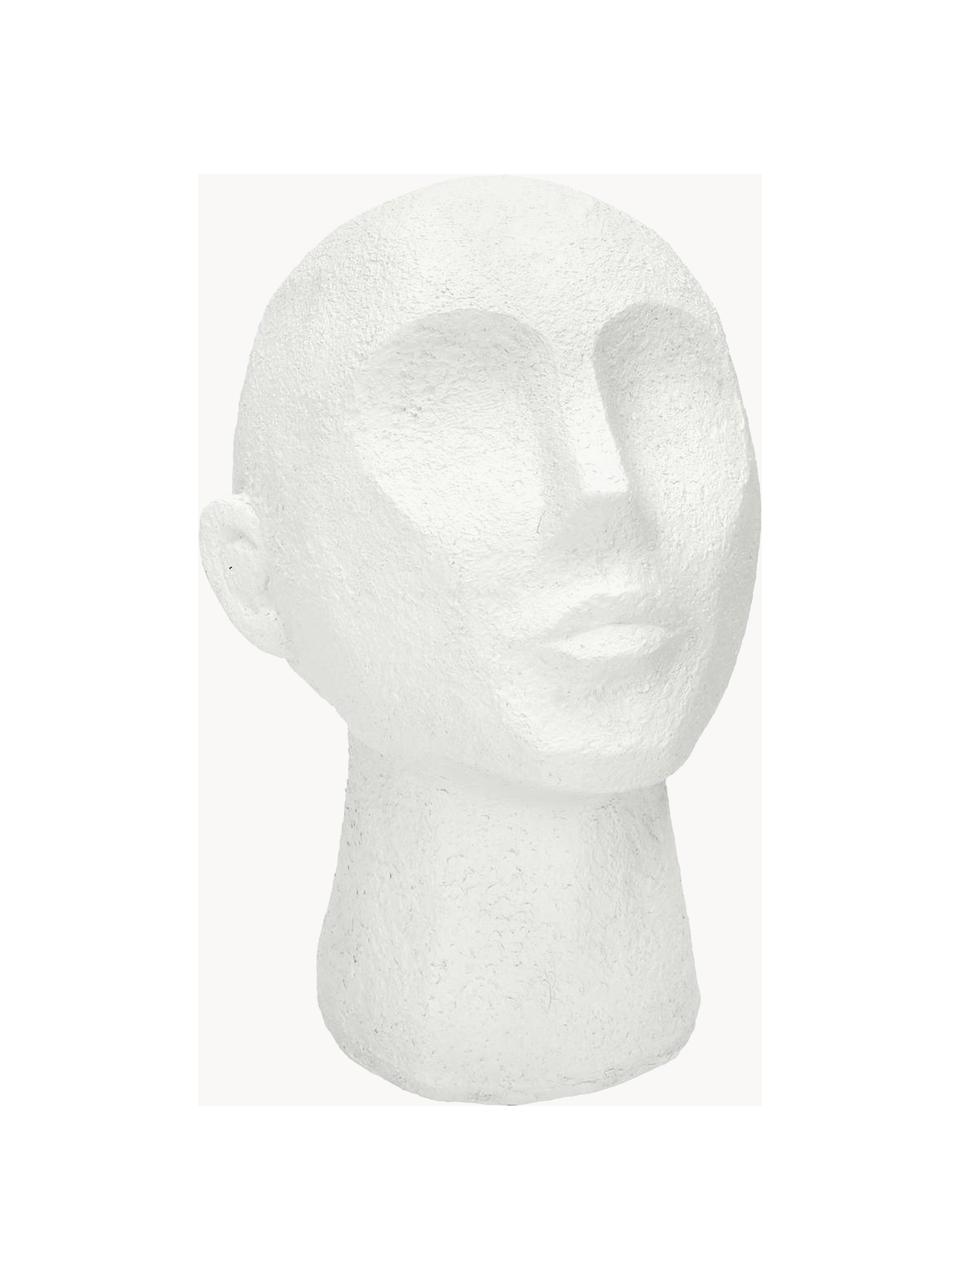 Deko-Objekt Head, Polyresin, Weiß, B 19 x H 23 cm